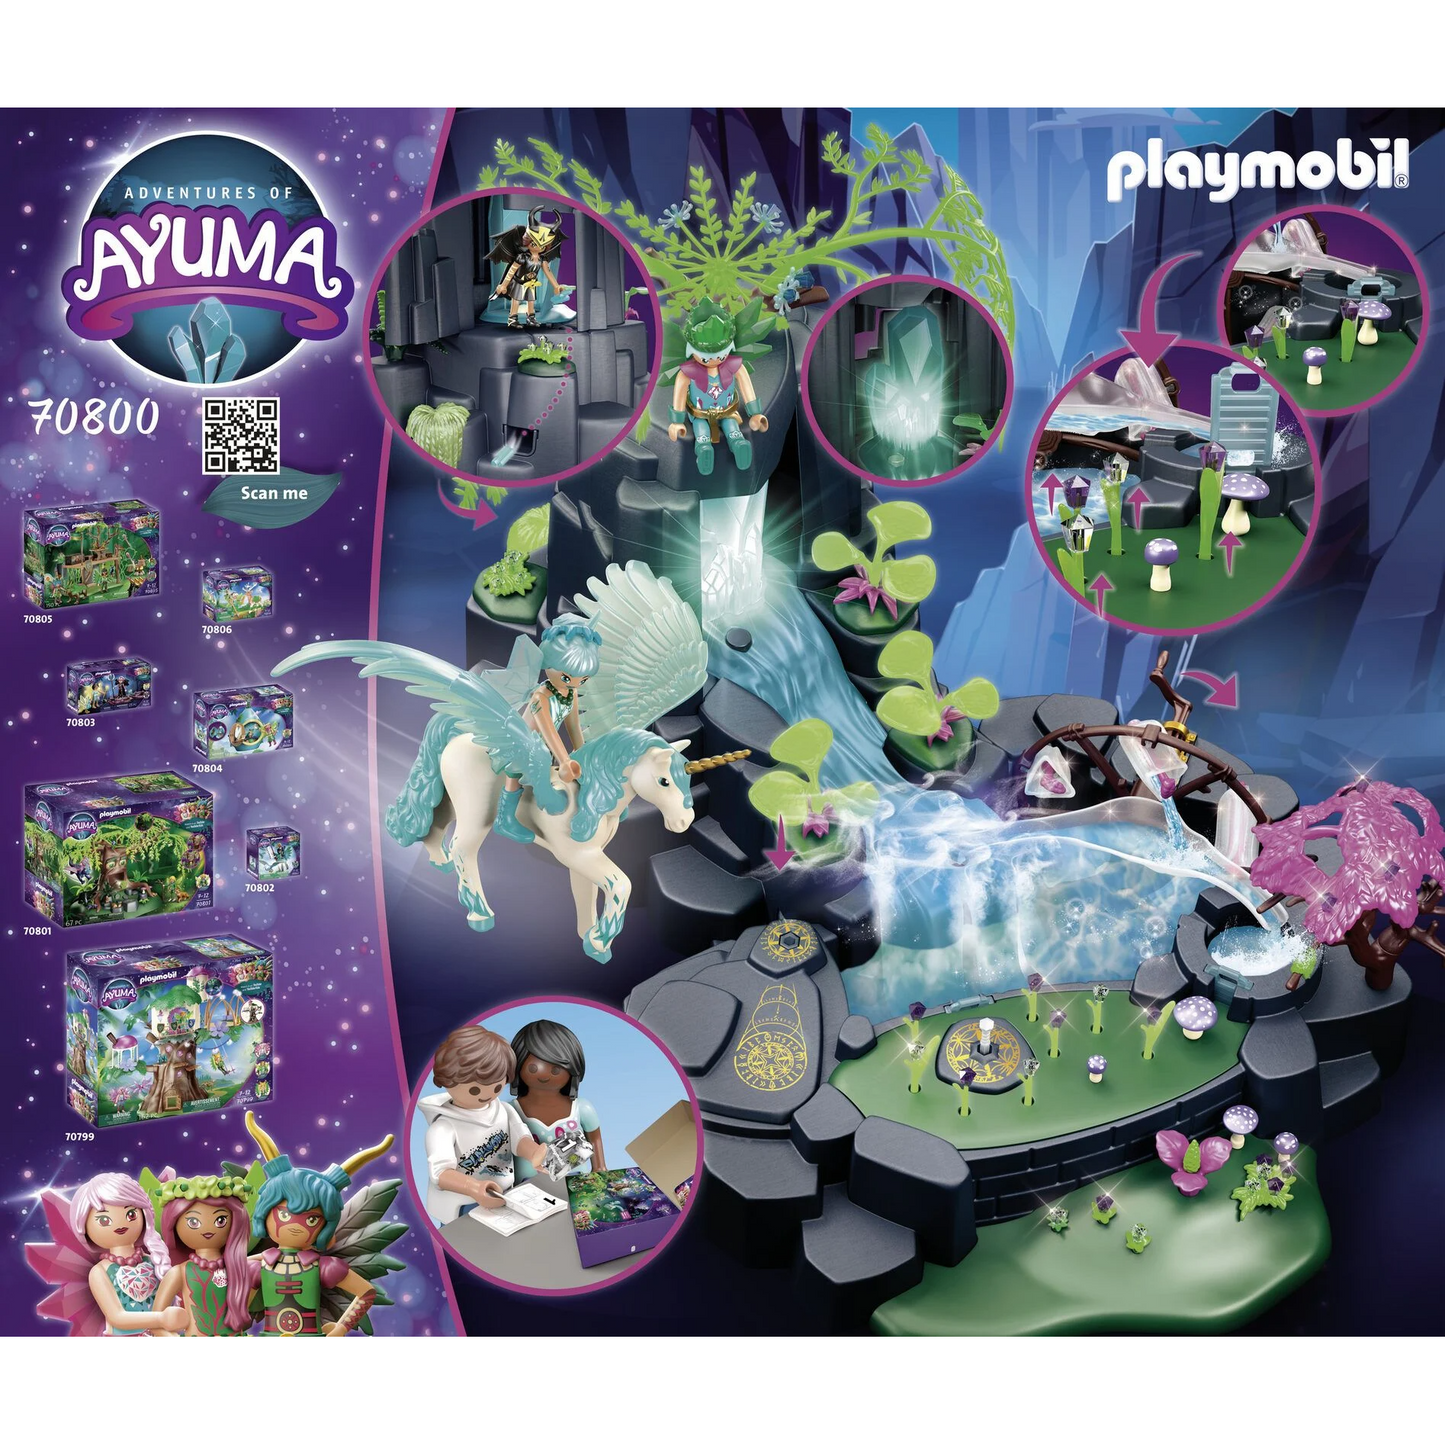 Playmobil 70800 Adventures of Ayuma Magical Energy Source